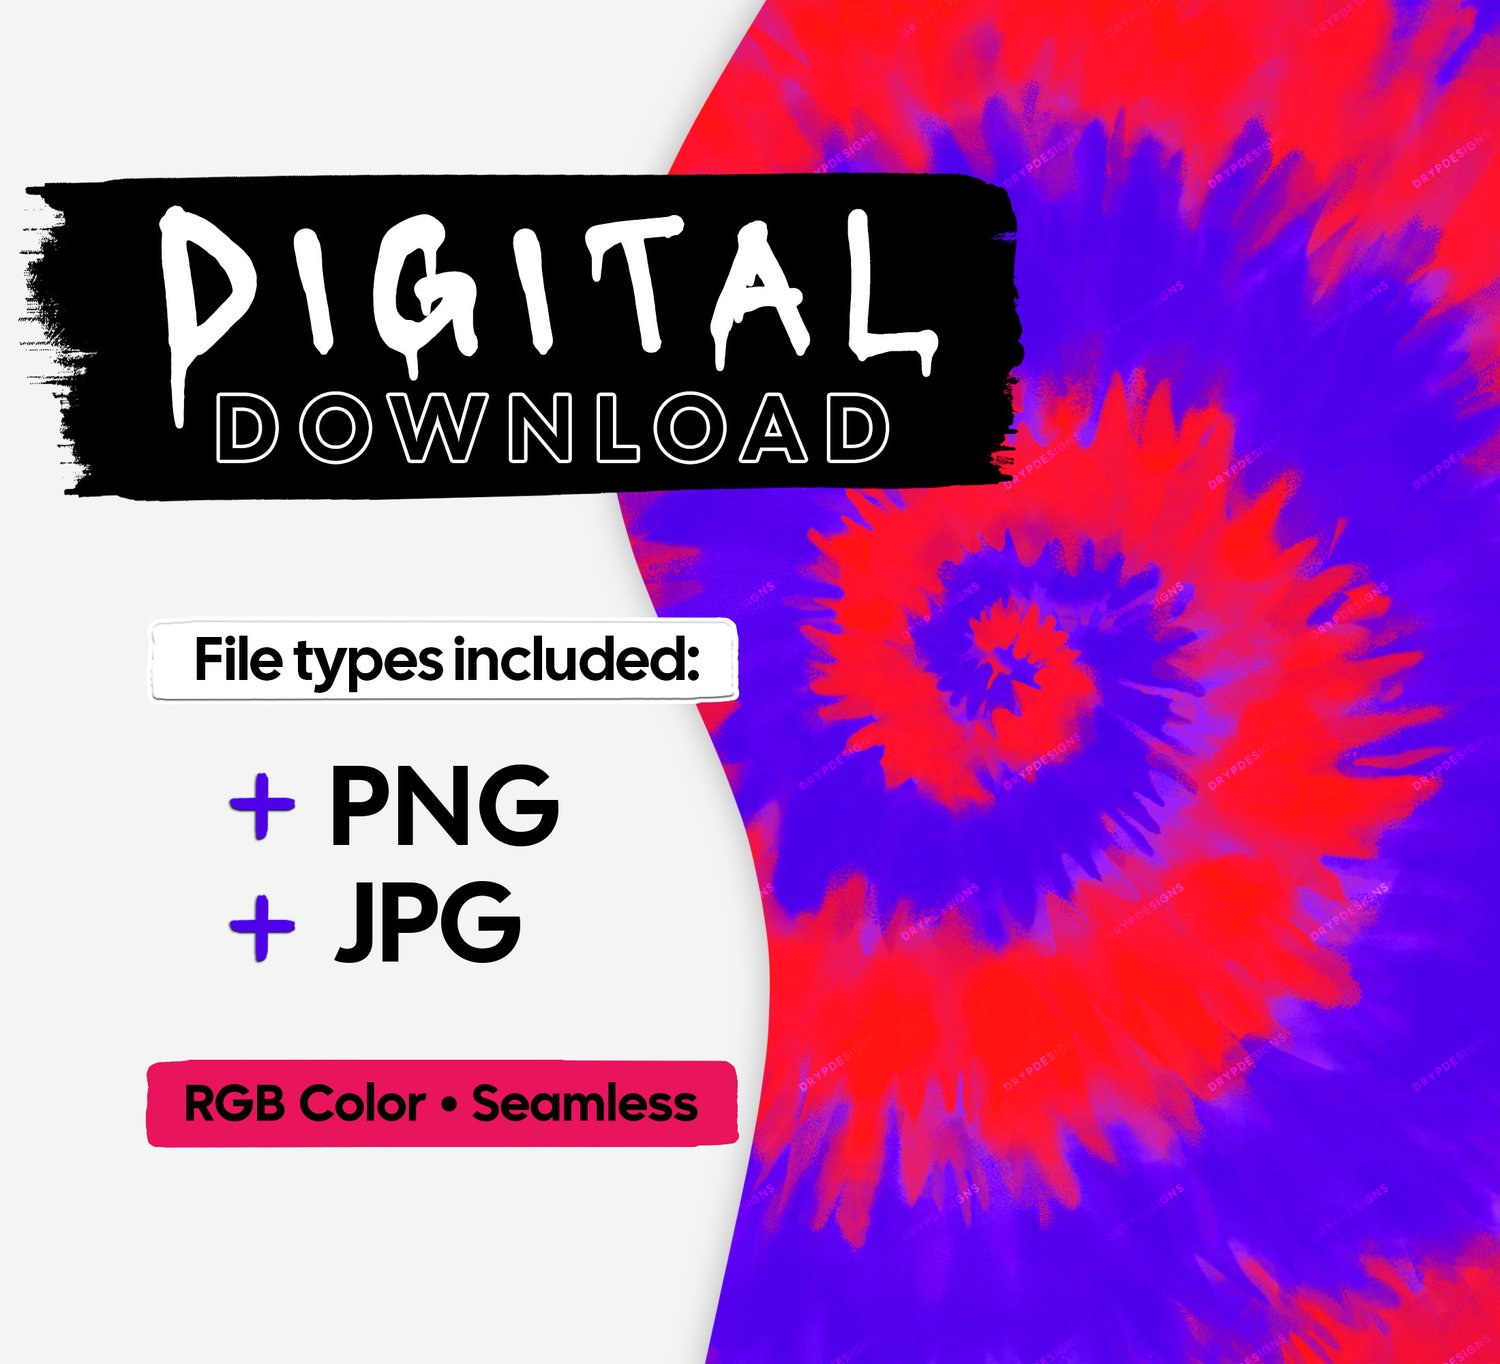 Vibrant Rainbow Tie-dye Swirl Background Pattern Texture Digital